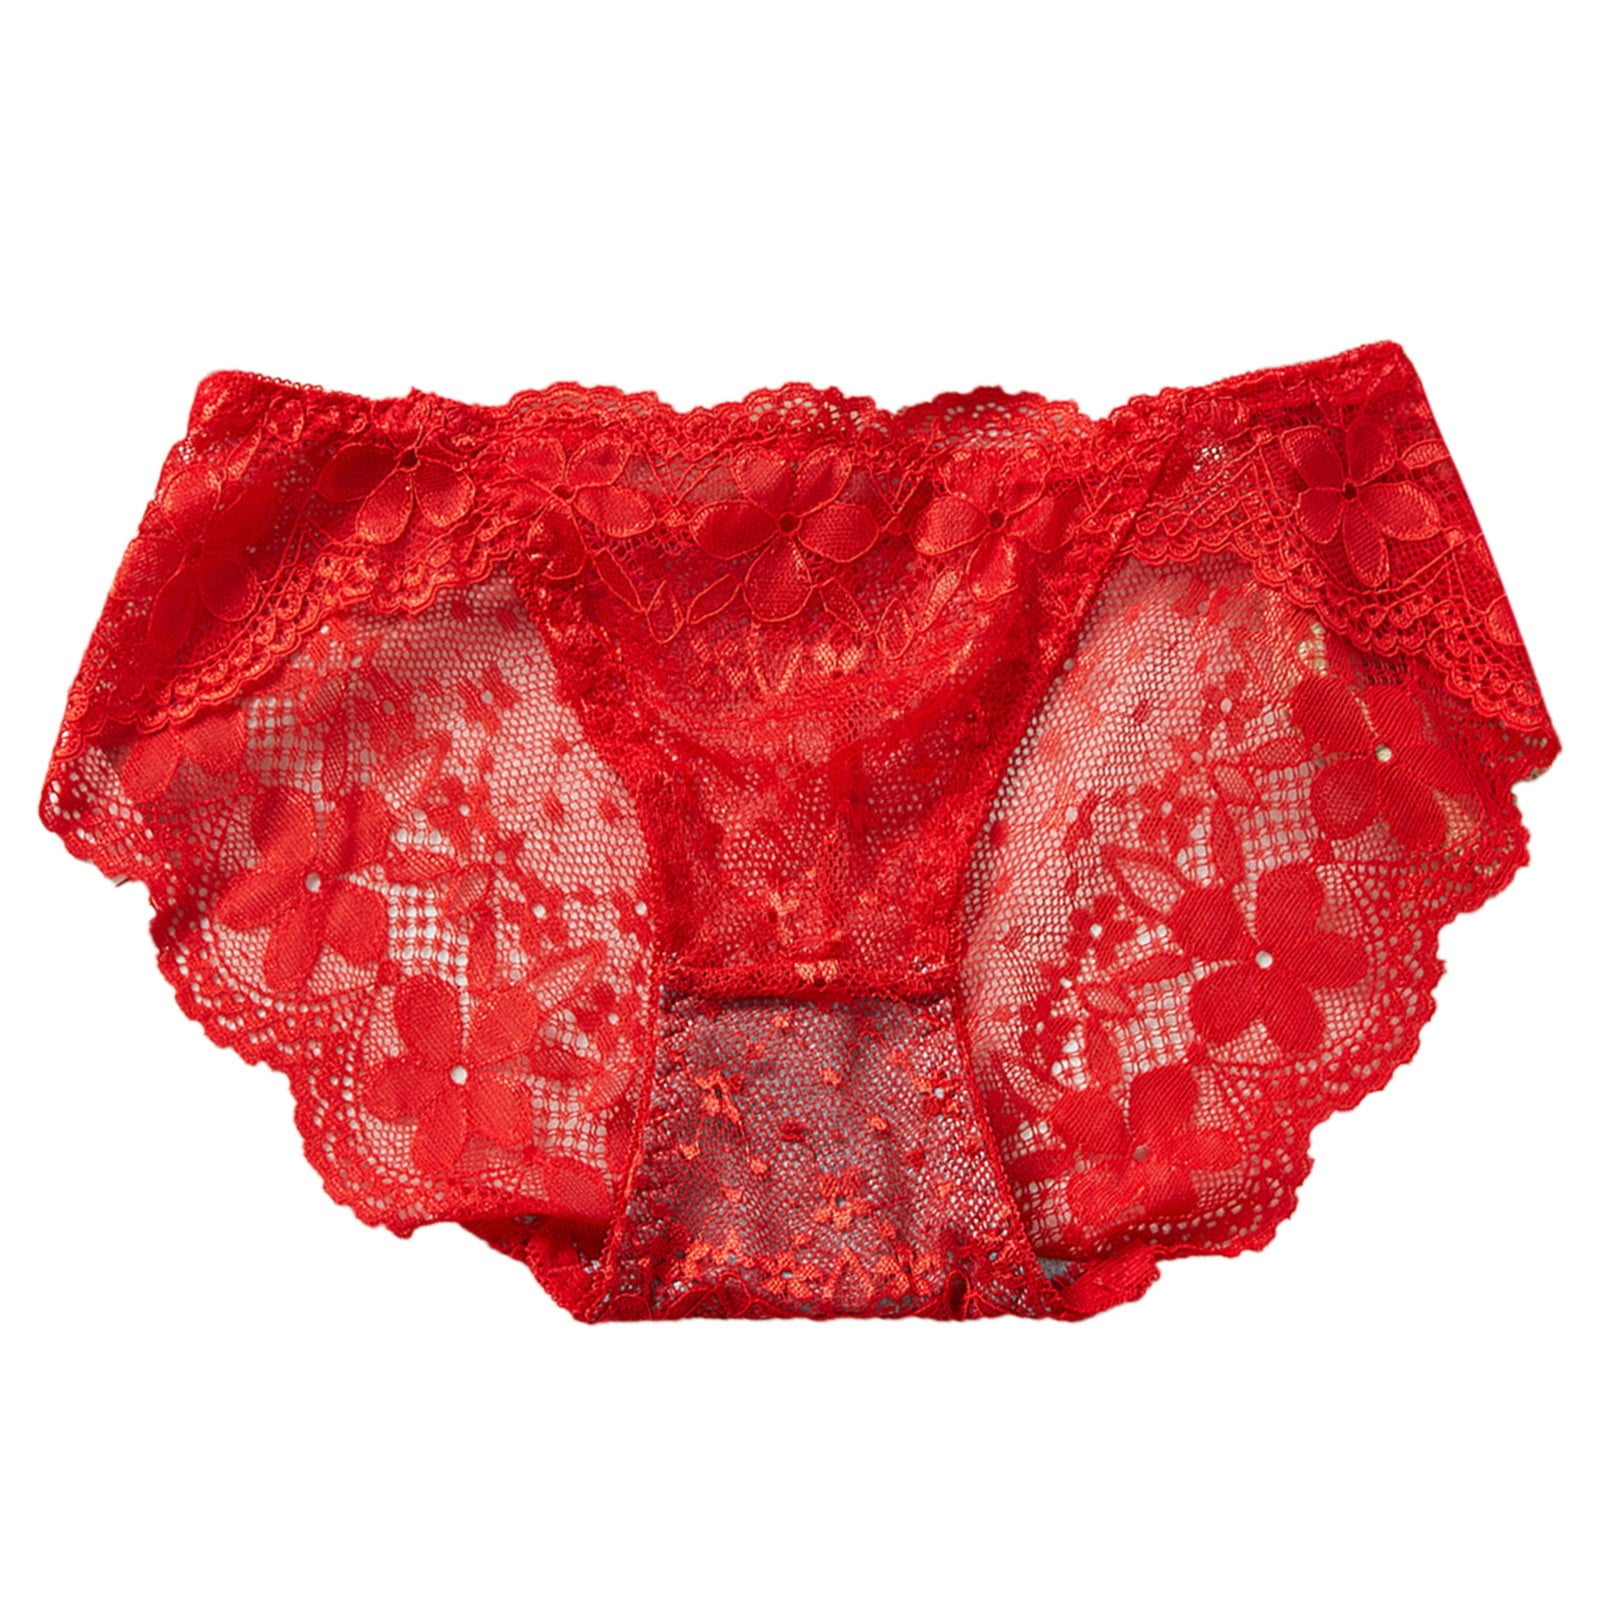 eczipvz Womens Underwear Thongs and Women's Bikini Panties in Our Softest  Fabric Ever,G